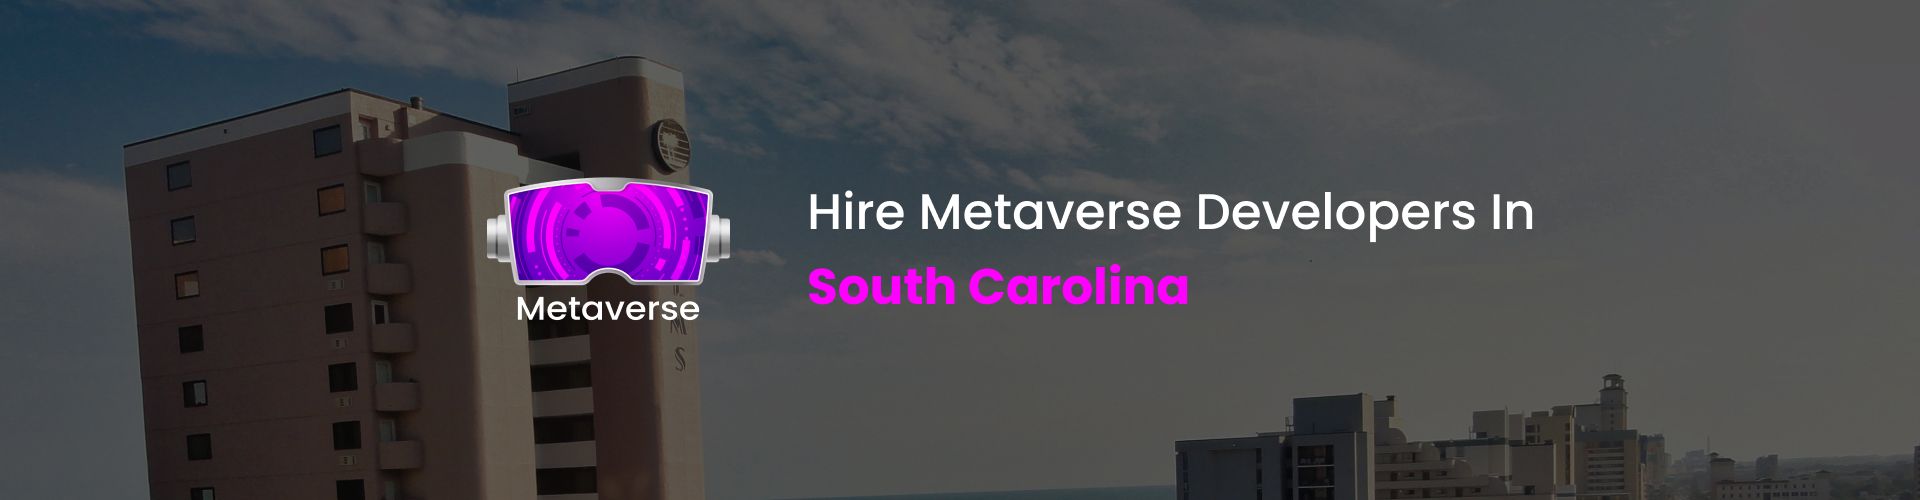 hire metaverse developers in south carolina